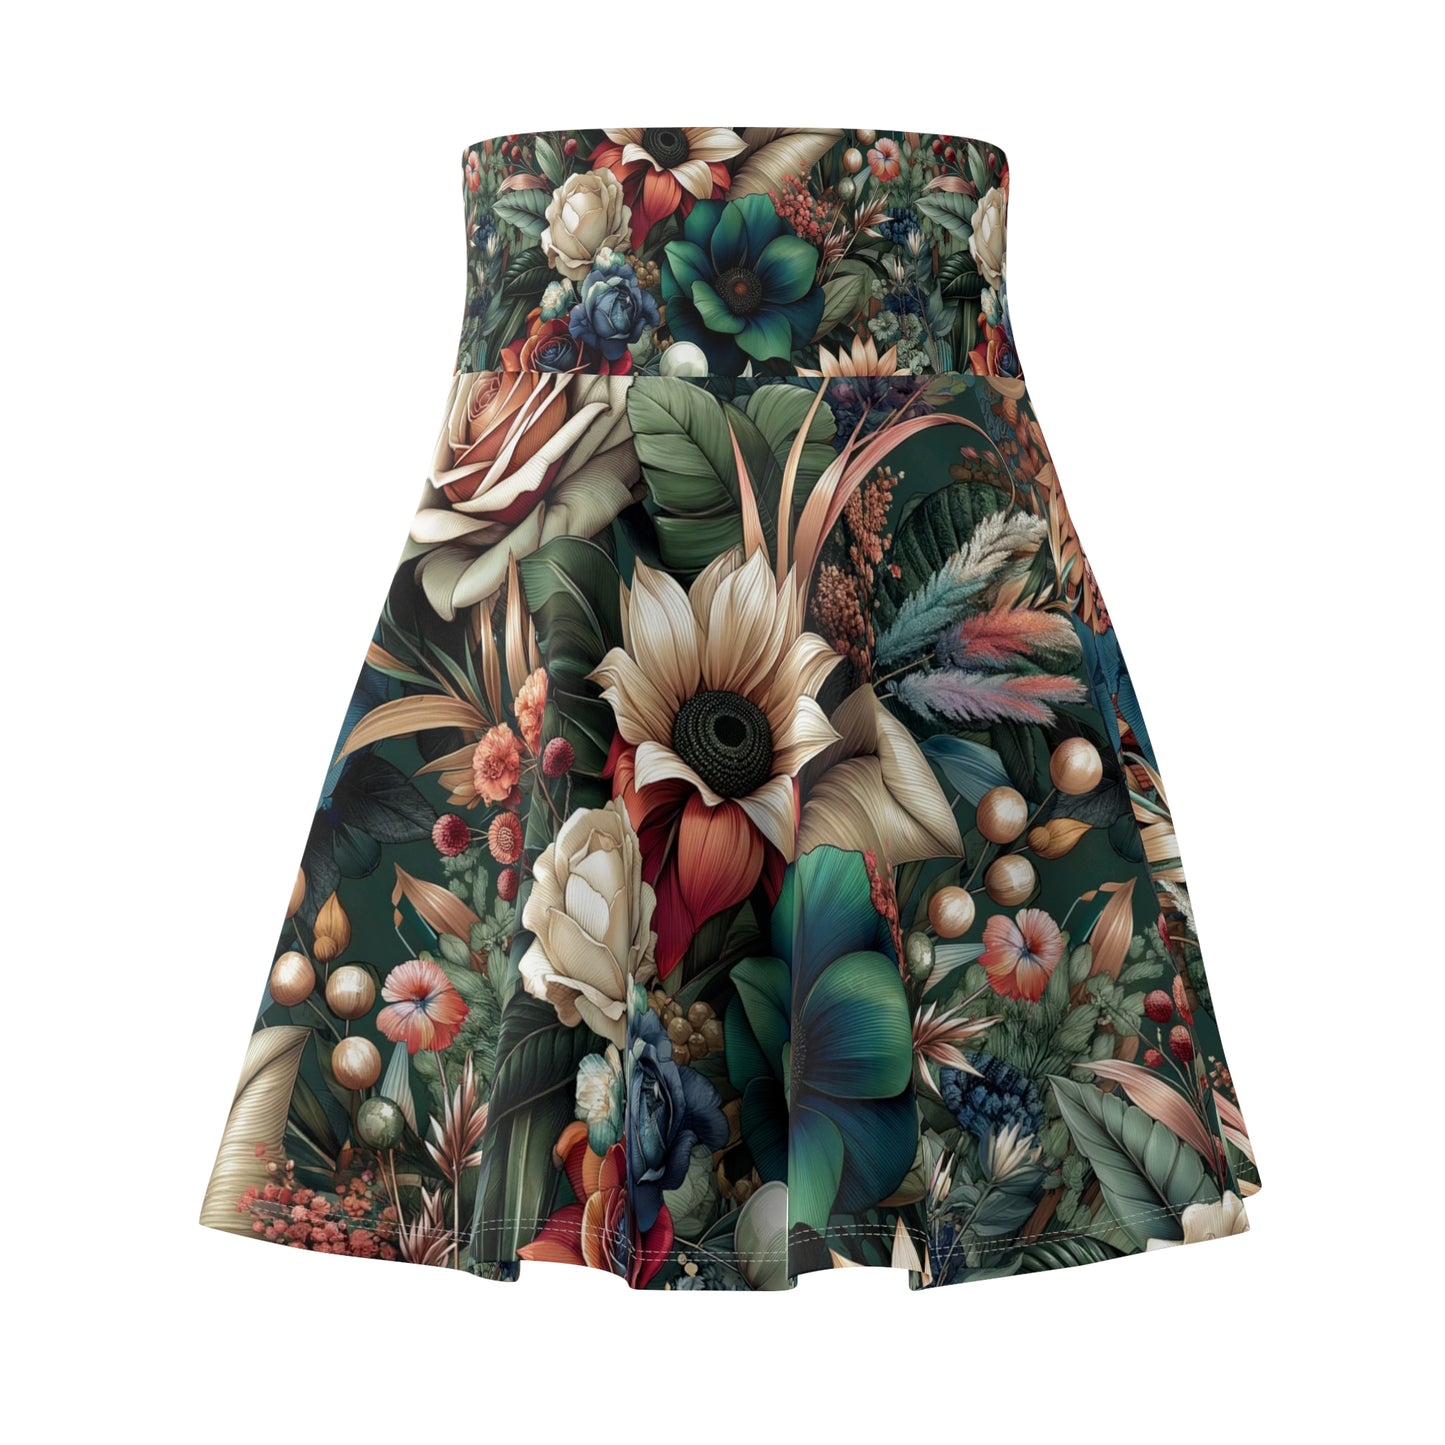 "Floral Symphony" Artistic Jewel-Tone Women's Skater Skirt